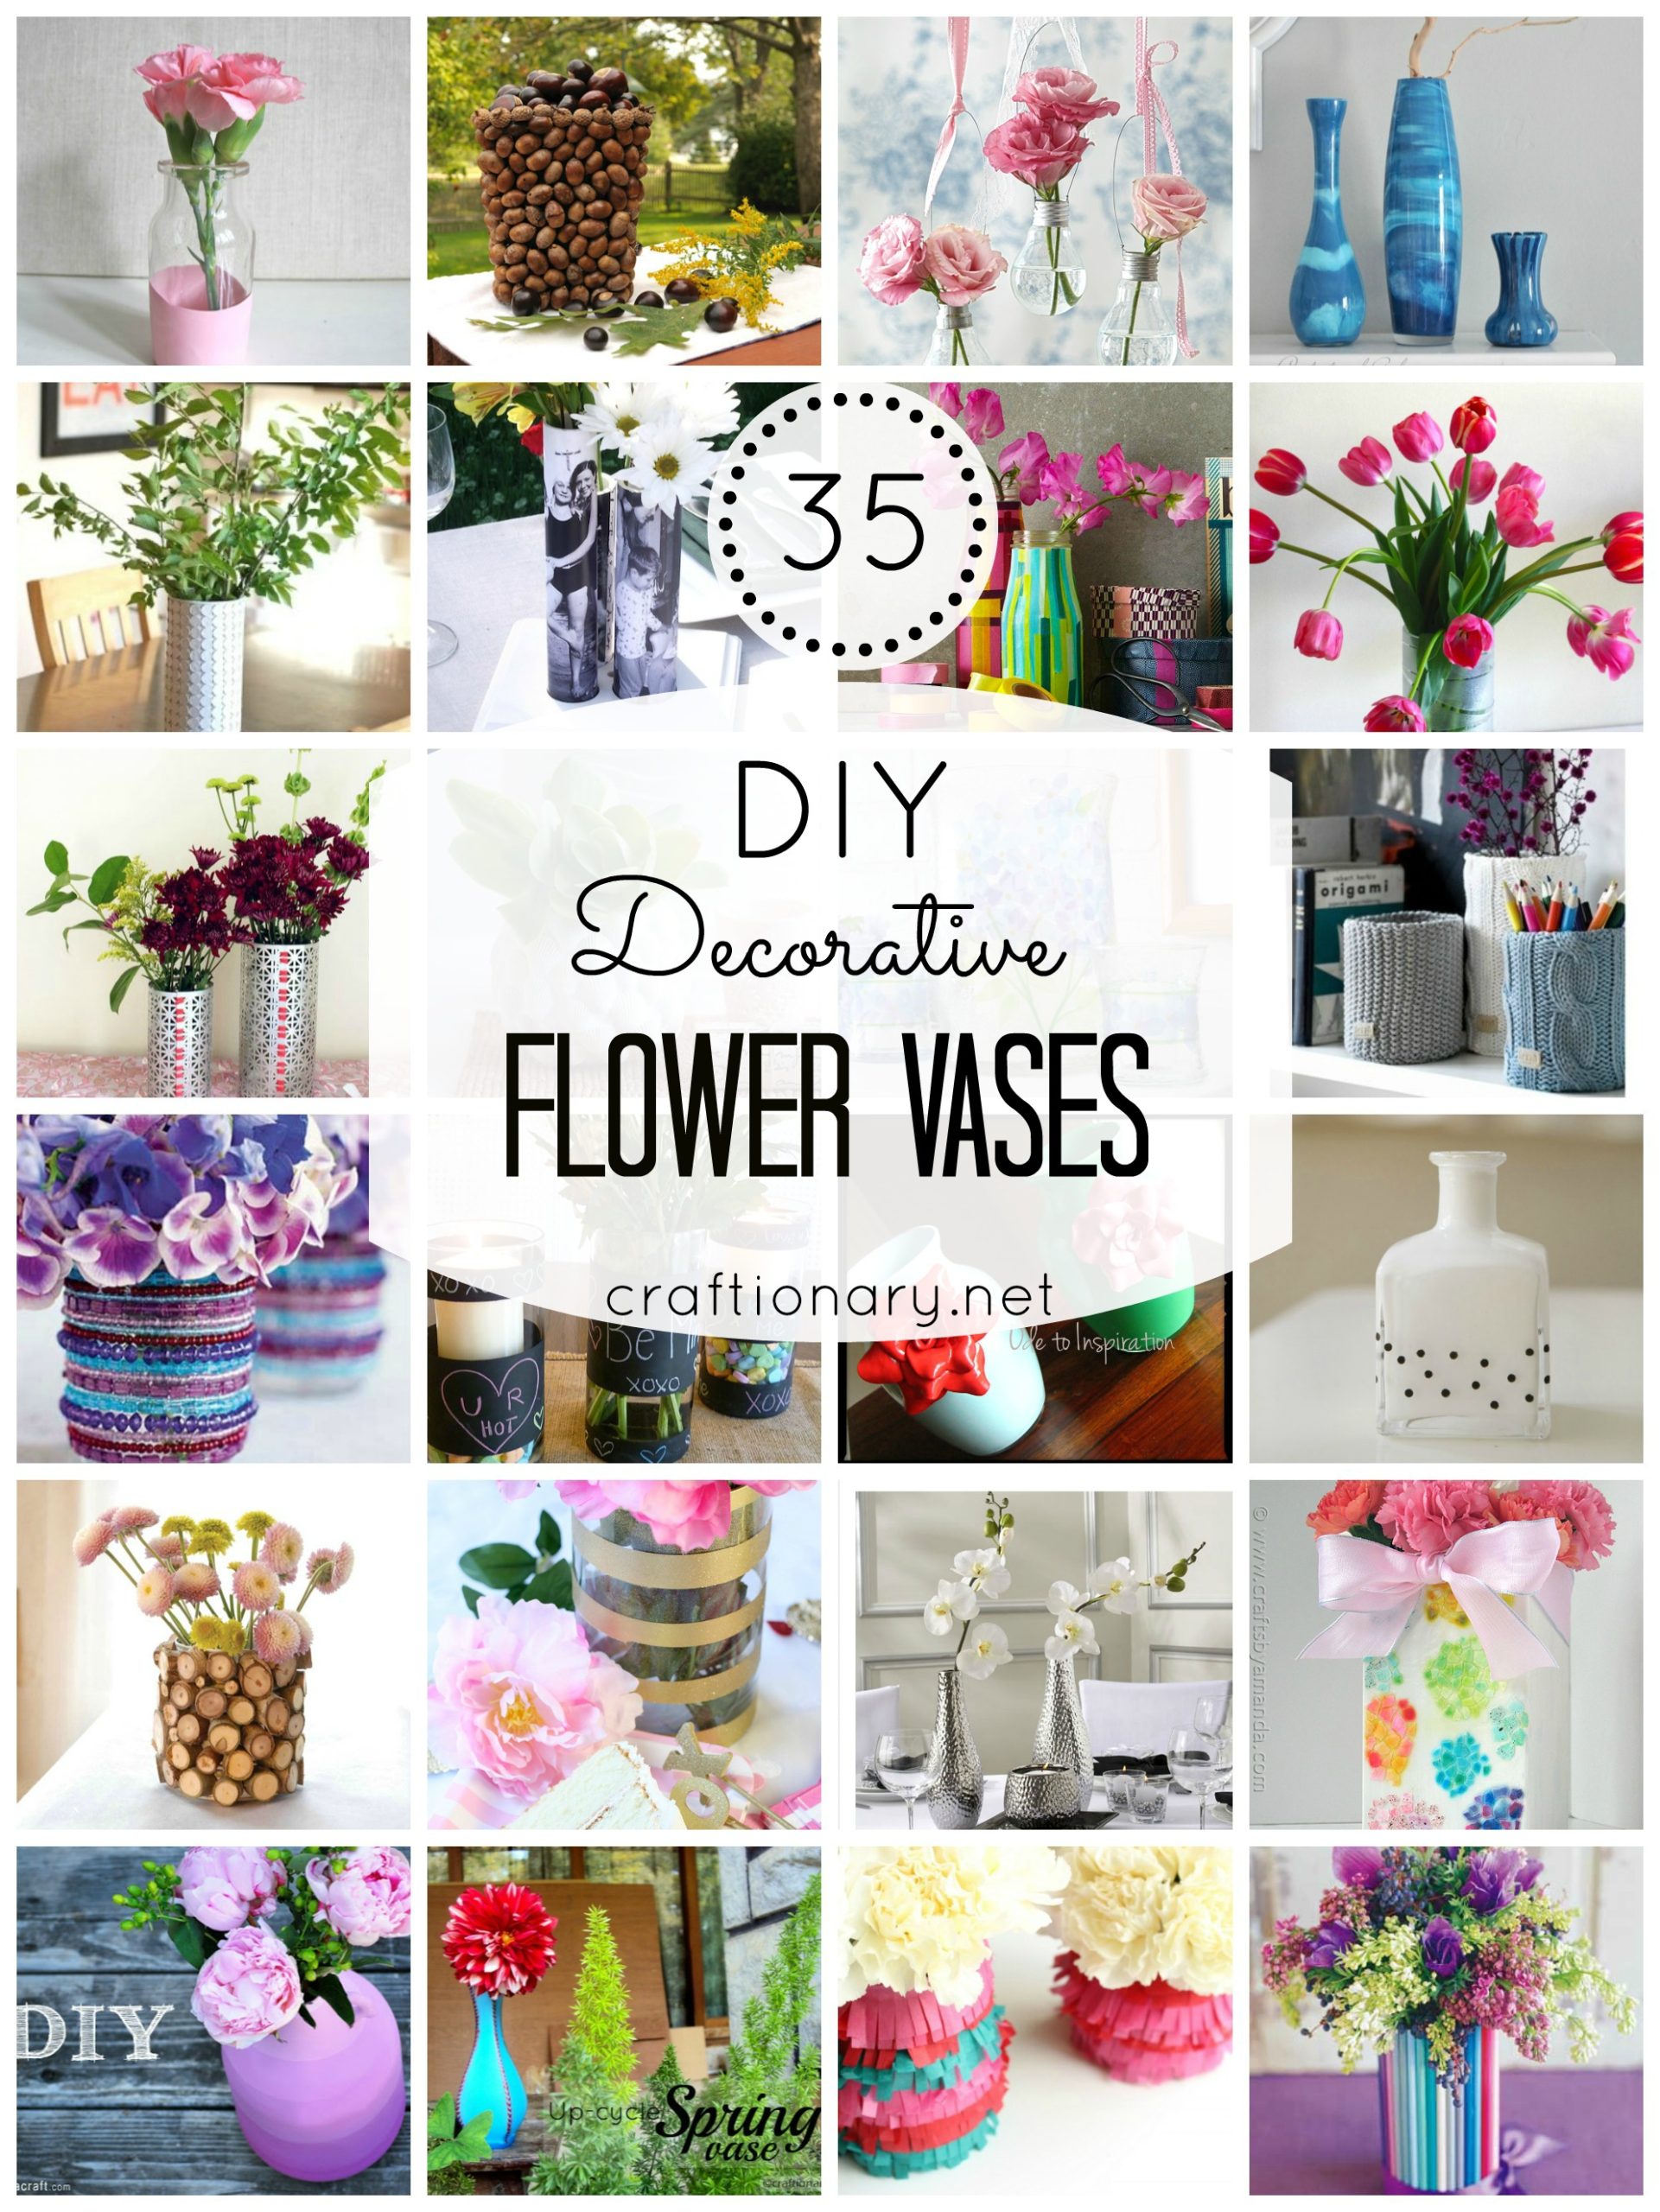 https://www.craftionary.net/wp-content/uploads/2013/04/DIY-flower-vases-scaled.jpg